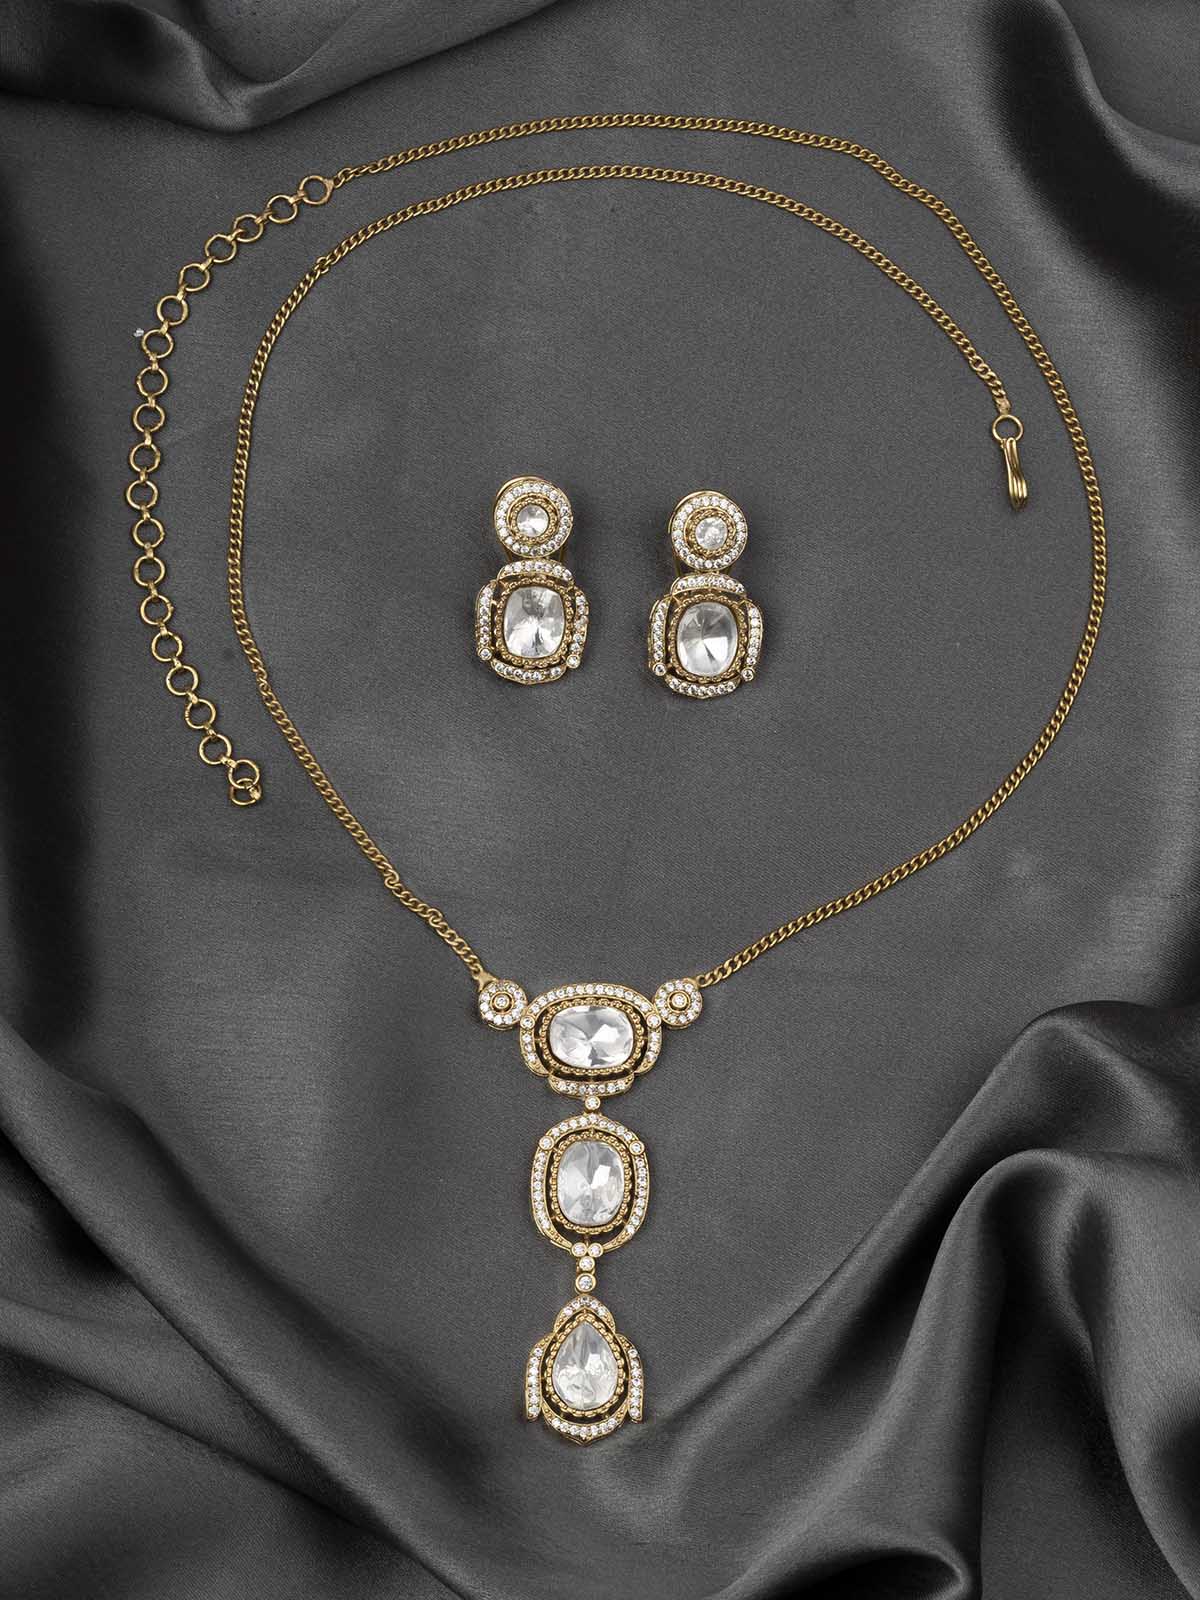 PK-S111 - White Color Gold Plated Faux Diamond Medium Necklace Set